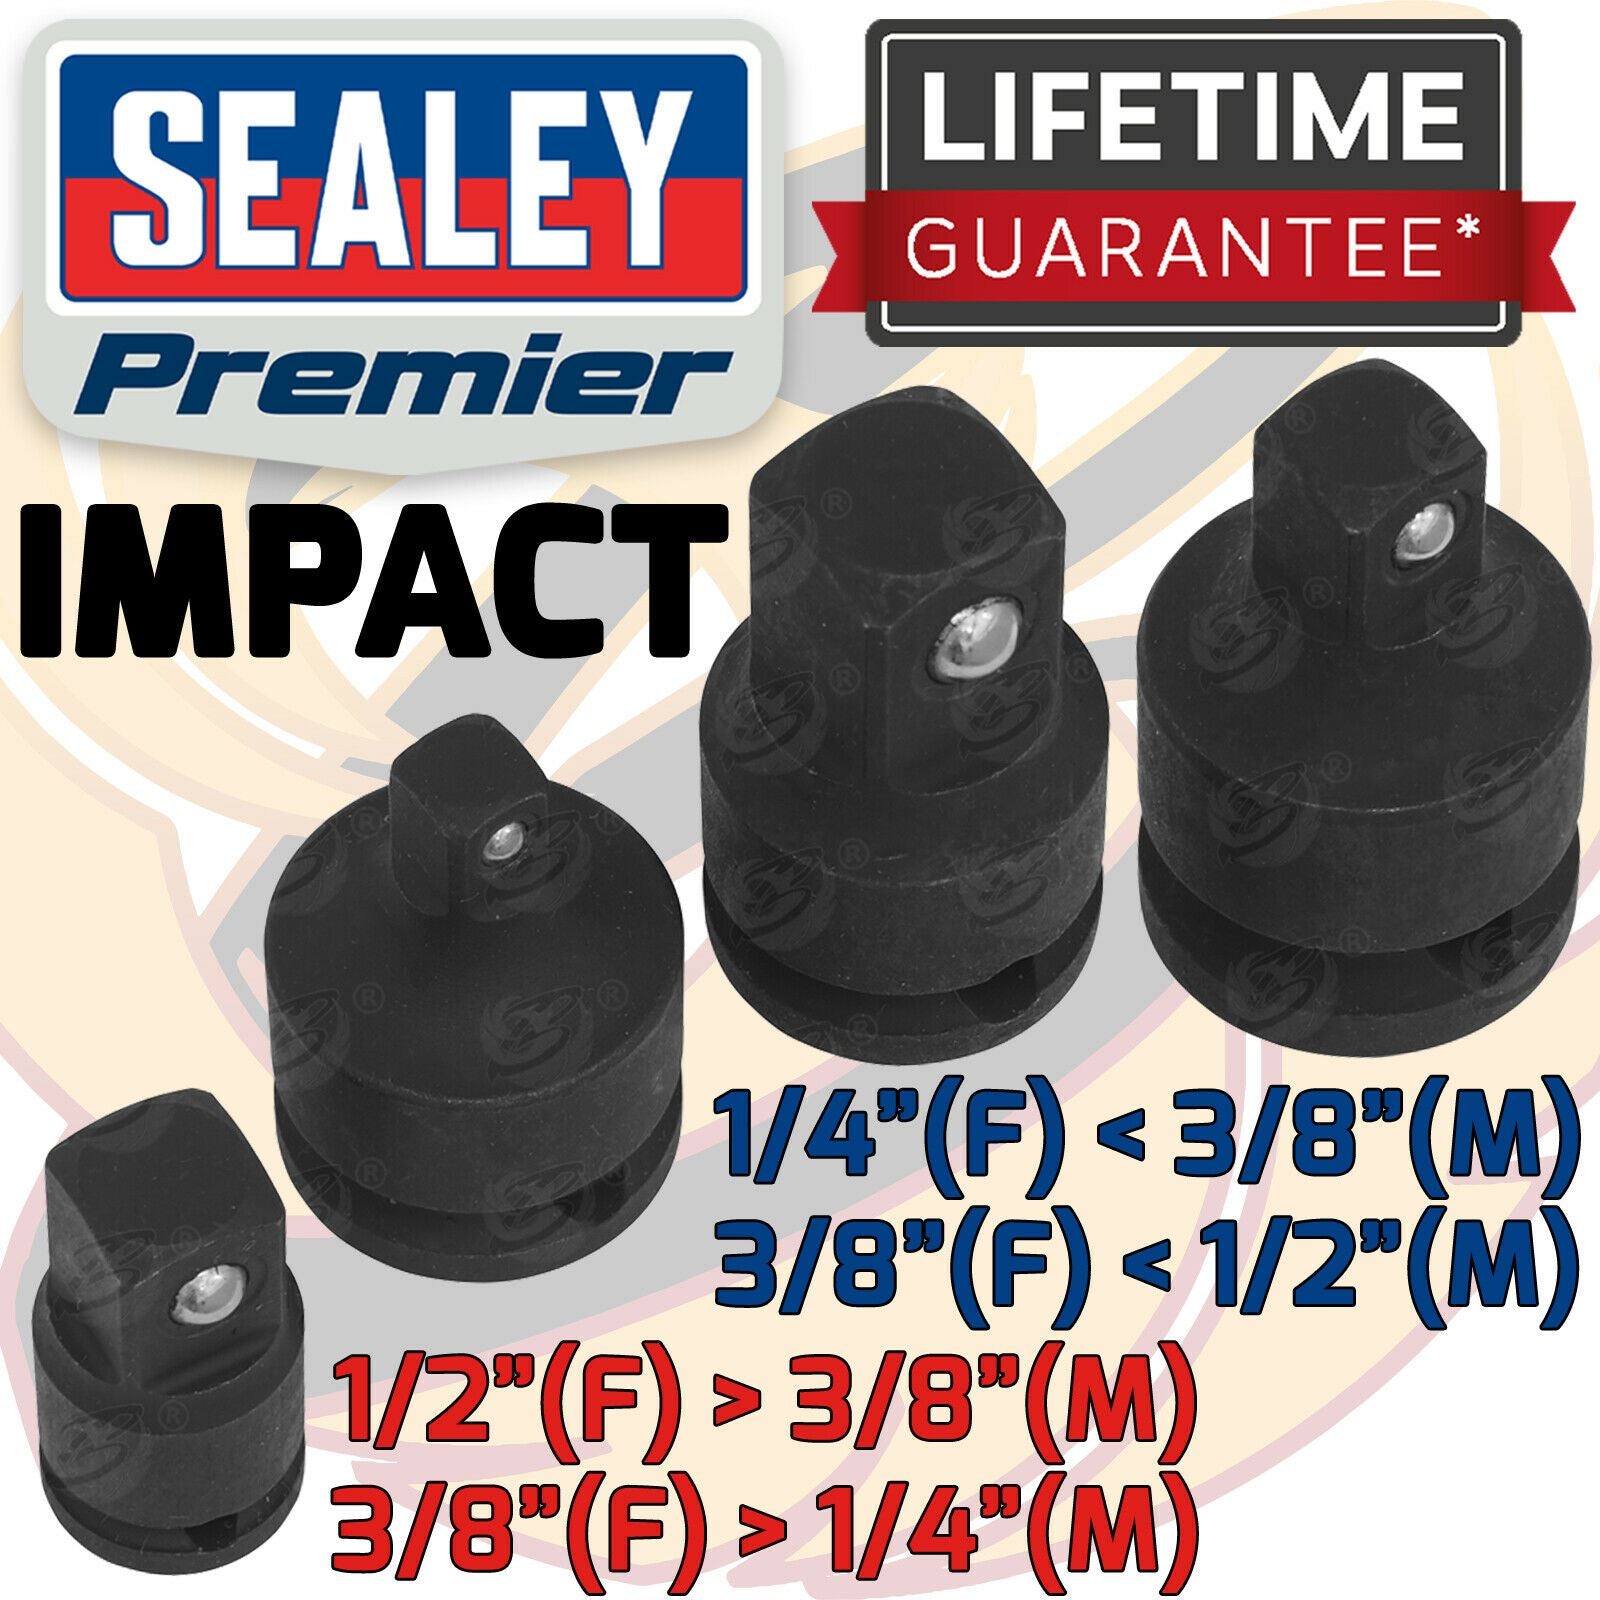 SEALEY 4PCS IMPACT SOCKET ADAPTERS ( 1/4" - 1/2" )